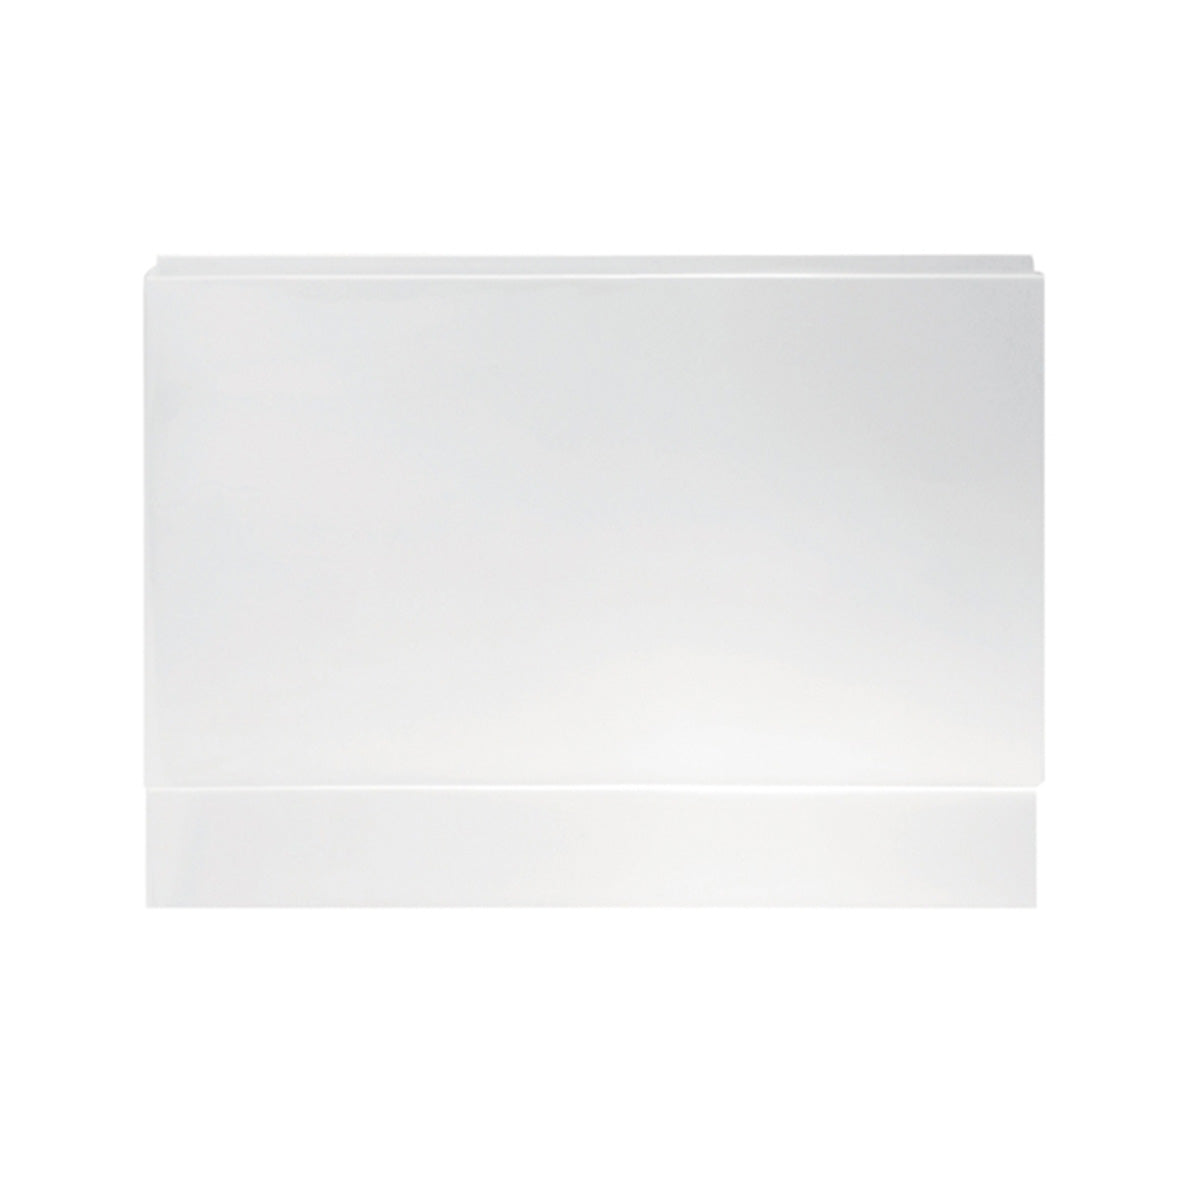 Bathroom High Gloss White Modern Acrylic End Bath Panel Cut to Size 800 x 510mm